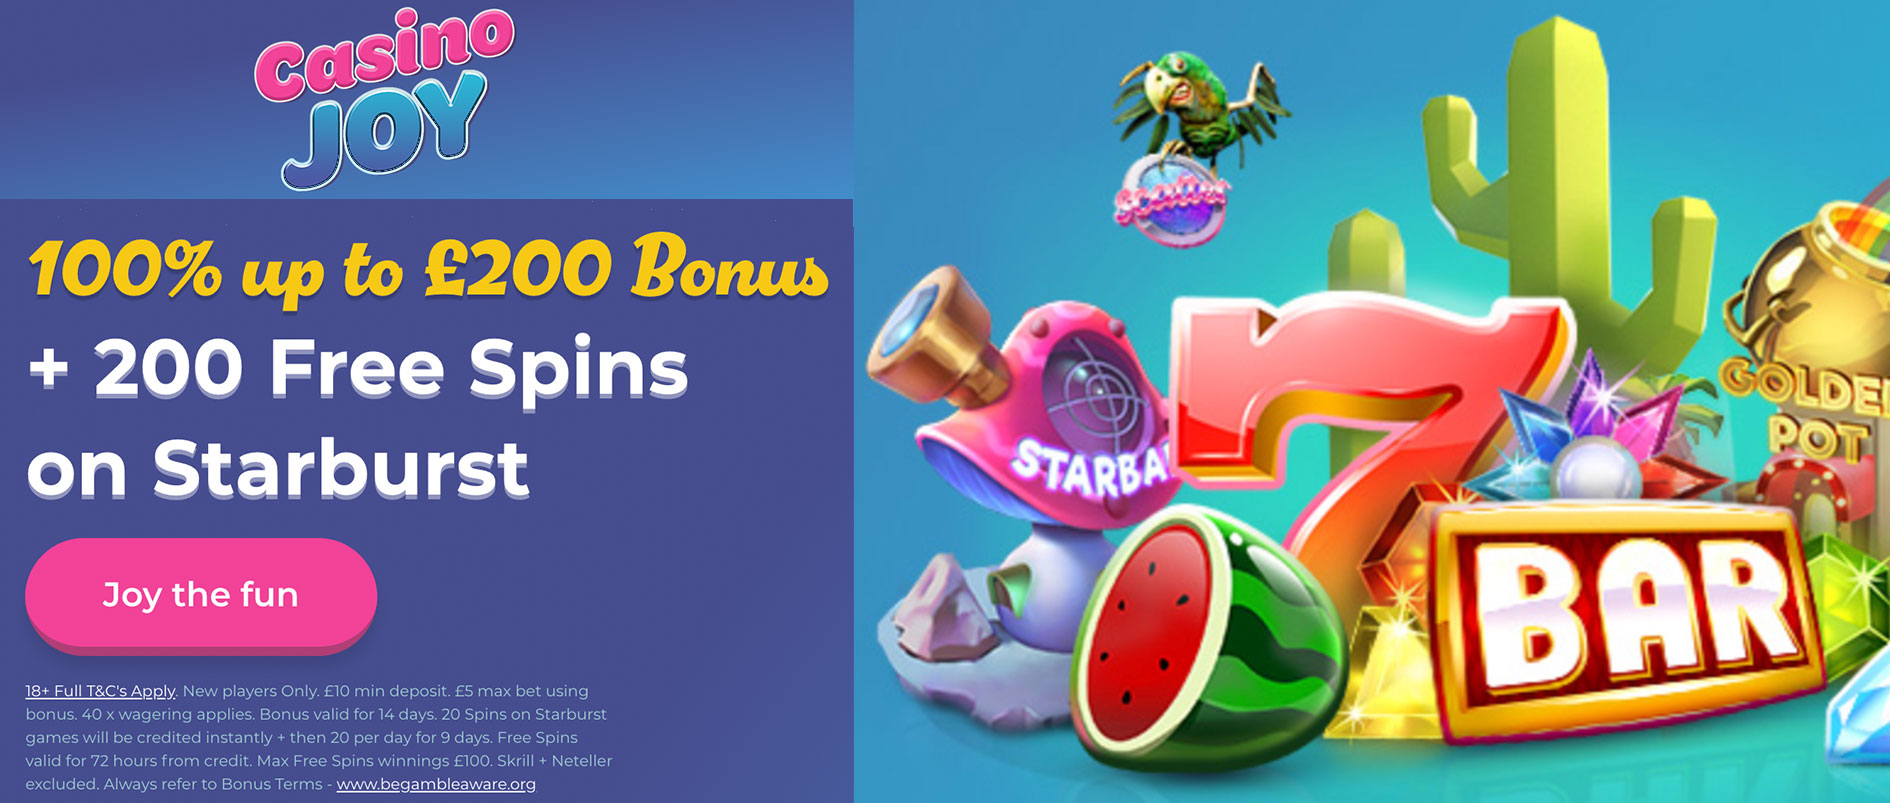 Casino joy welcome bonus